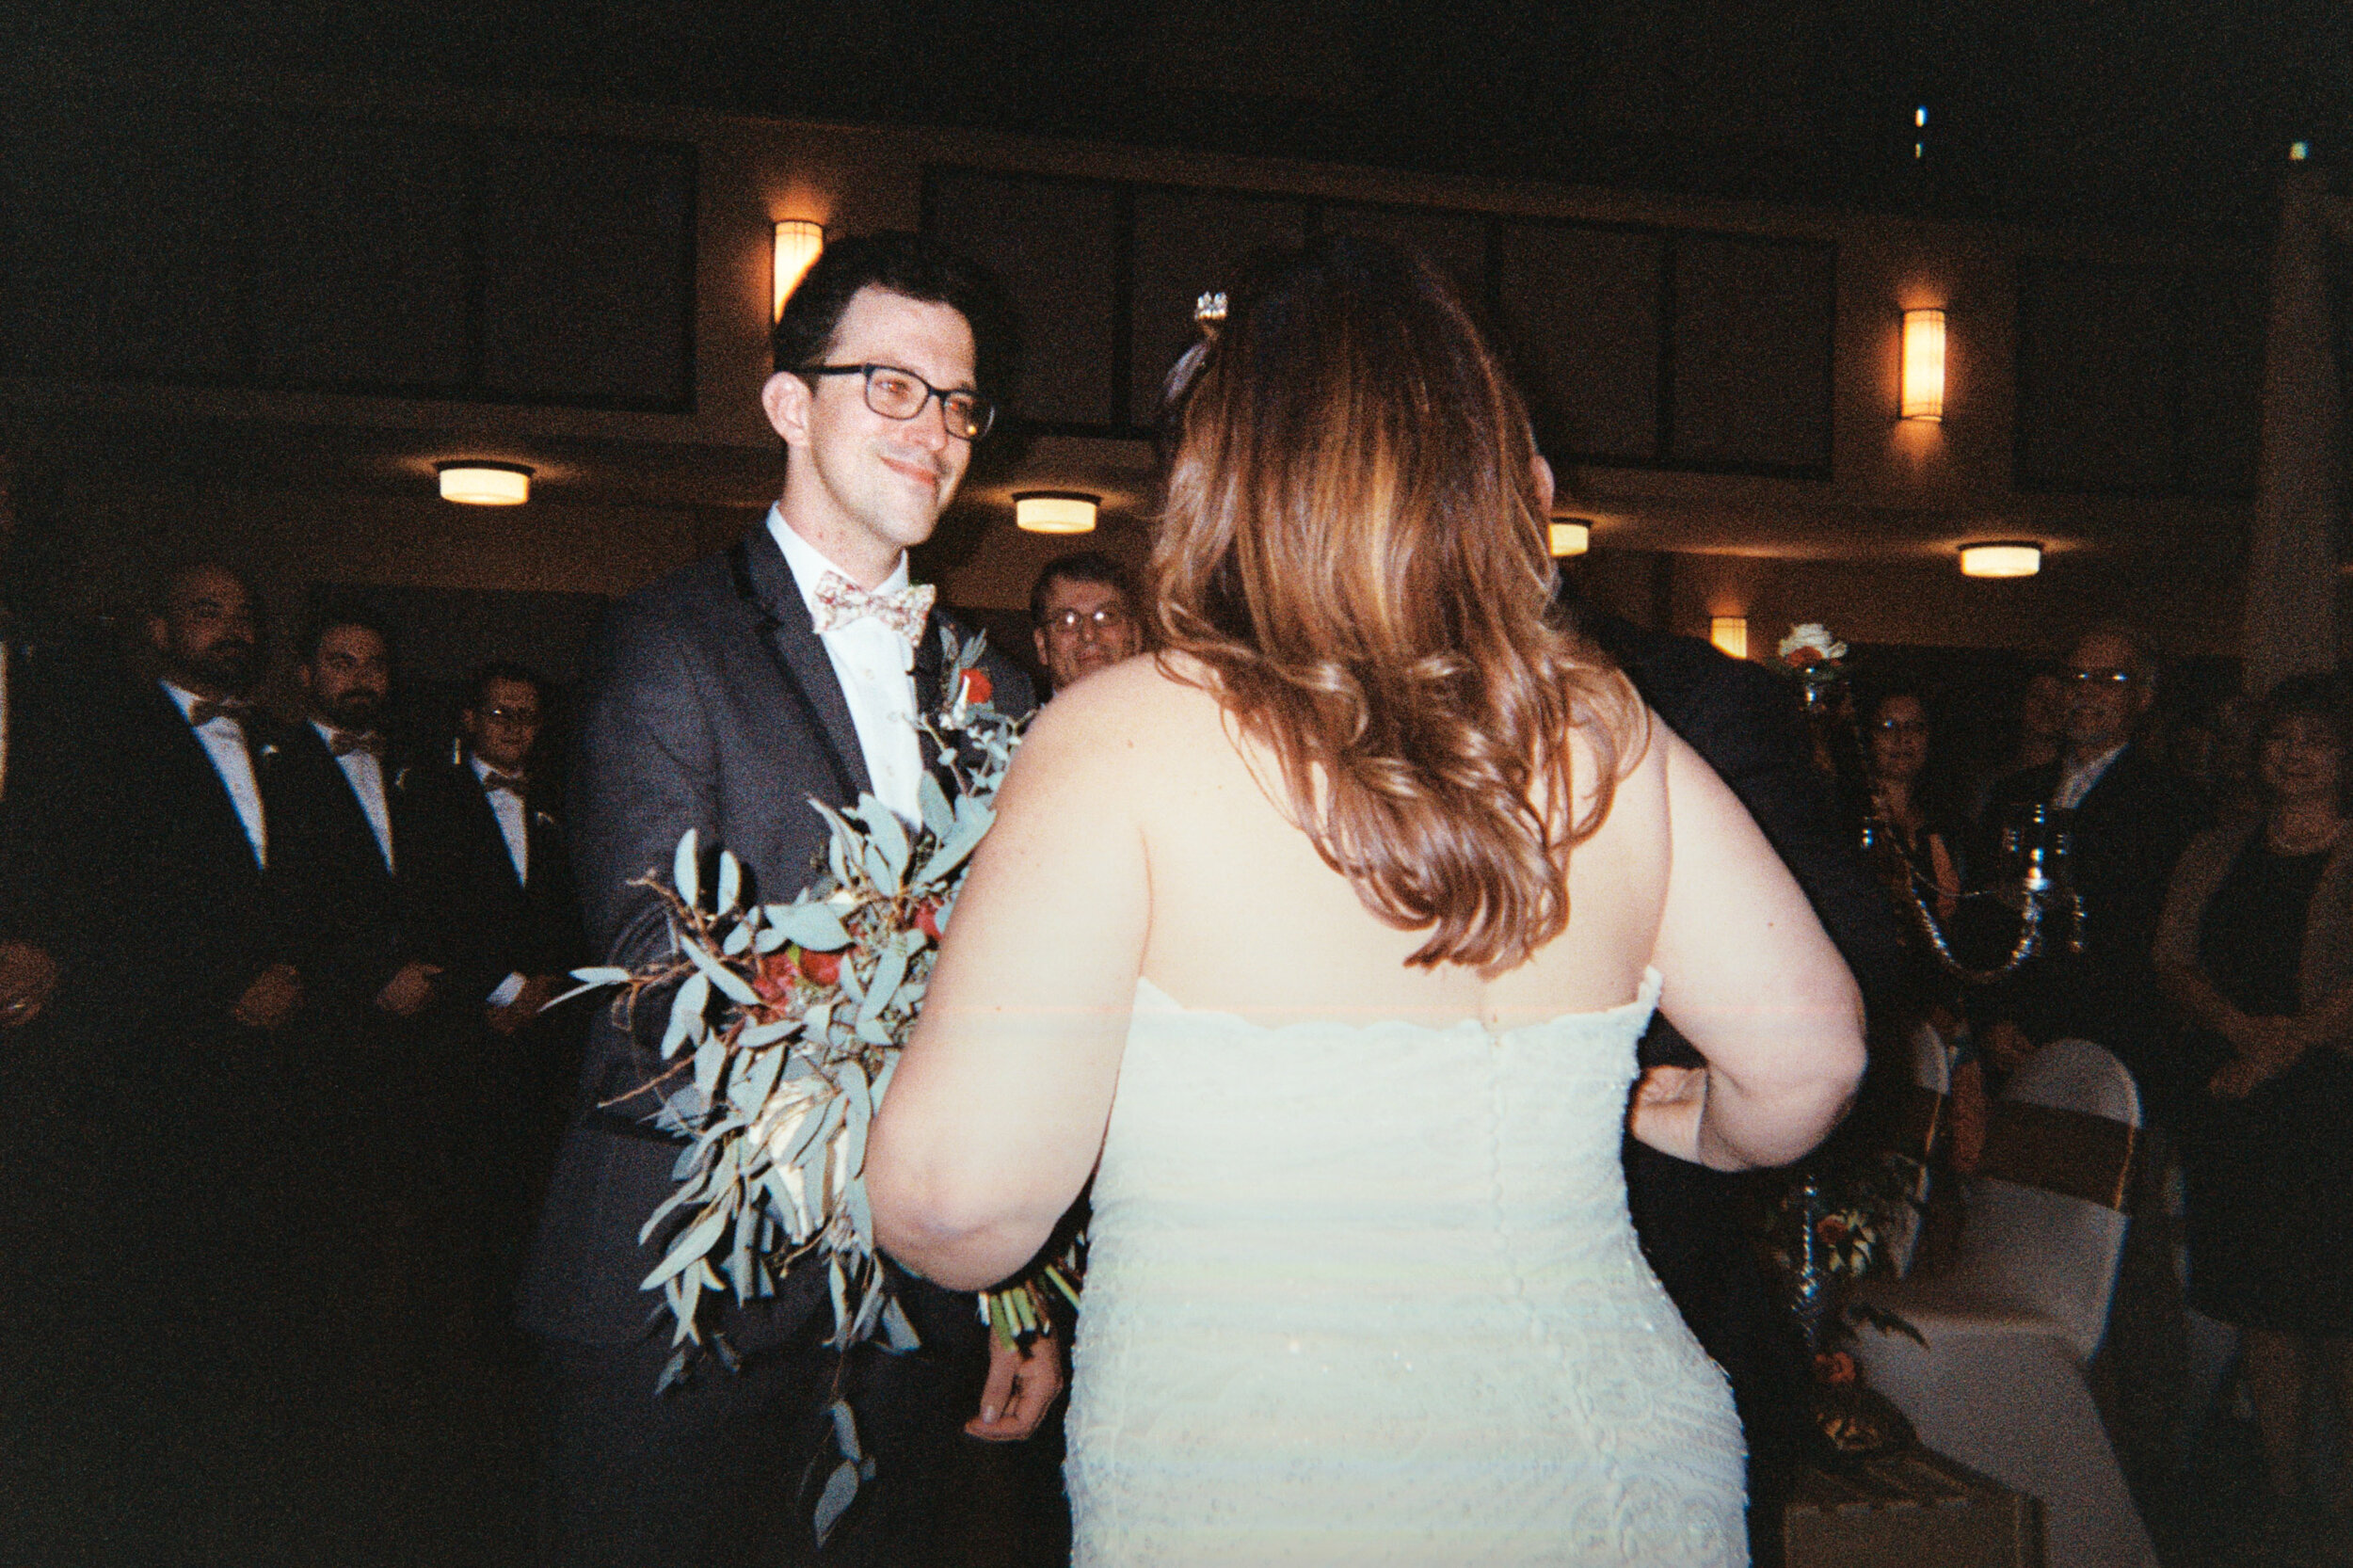 Pittsburgh NYC Film Wedding Photographer - Rat Lab - Lawrenceville - Stephanie Dave169.jpg